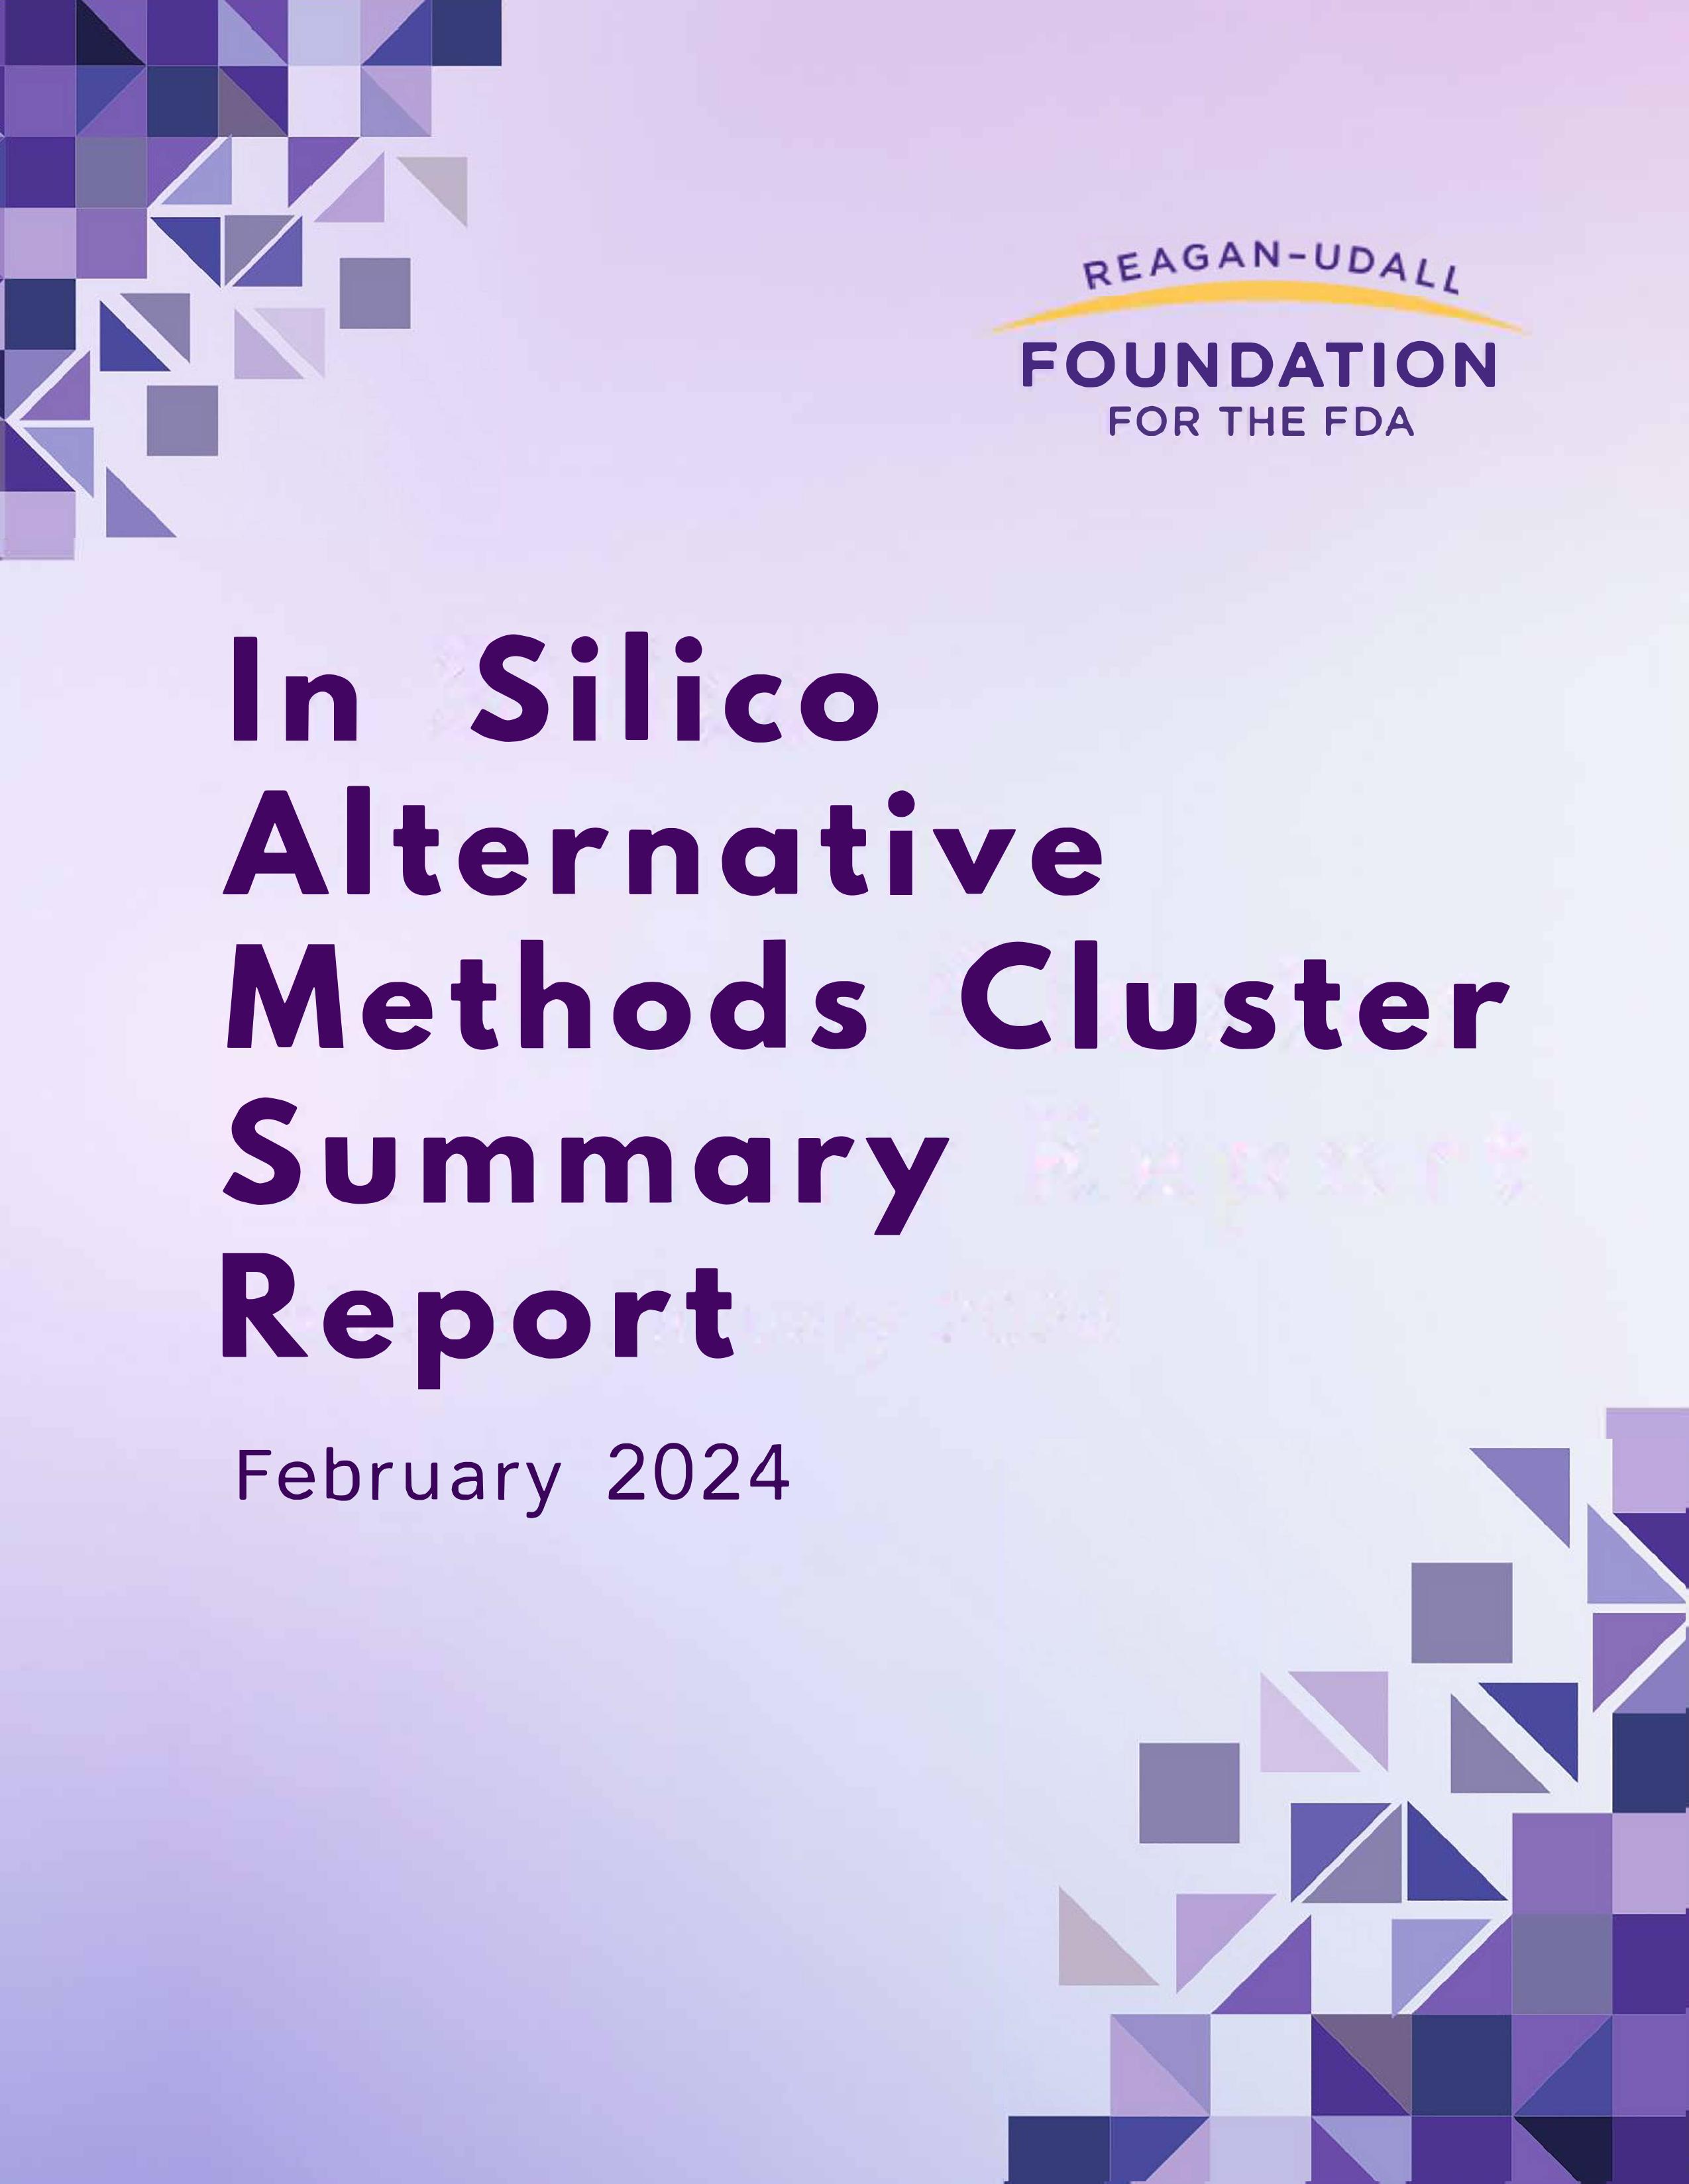 In Silico Alternative Methods Cluster Summary Report